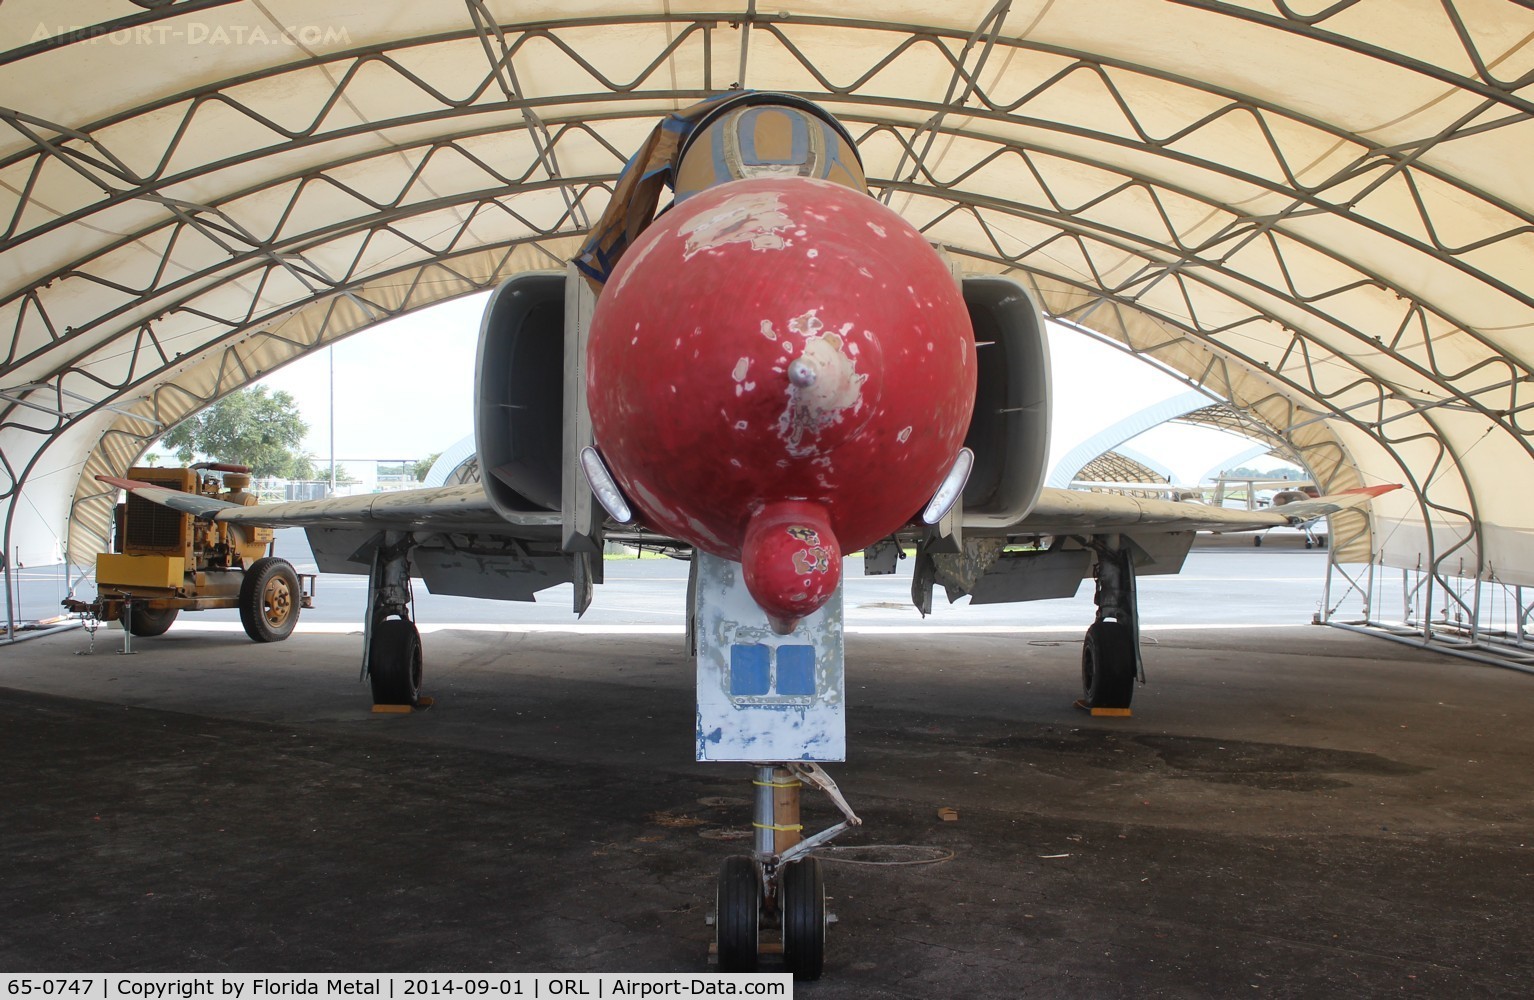 65-0747, 1965 McDonnell F-4D Phantom II C/N 1810, Joe Kittingers F-4 before it was restored